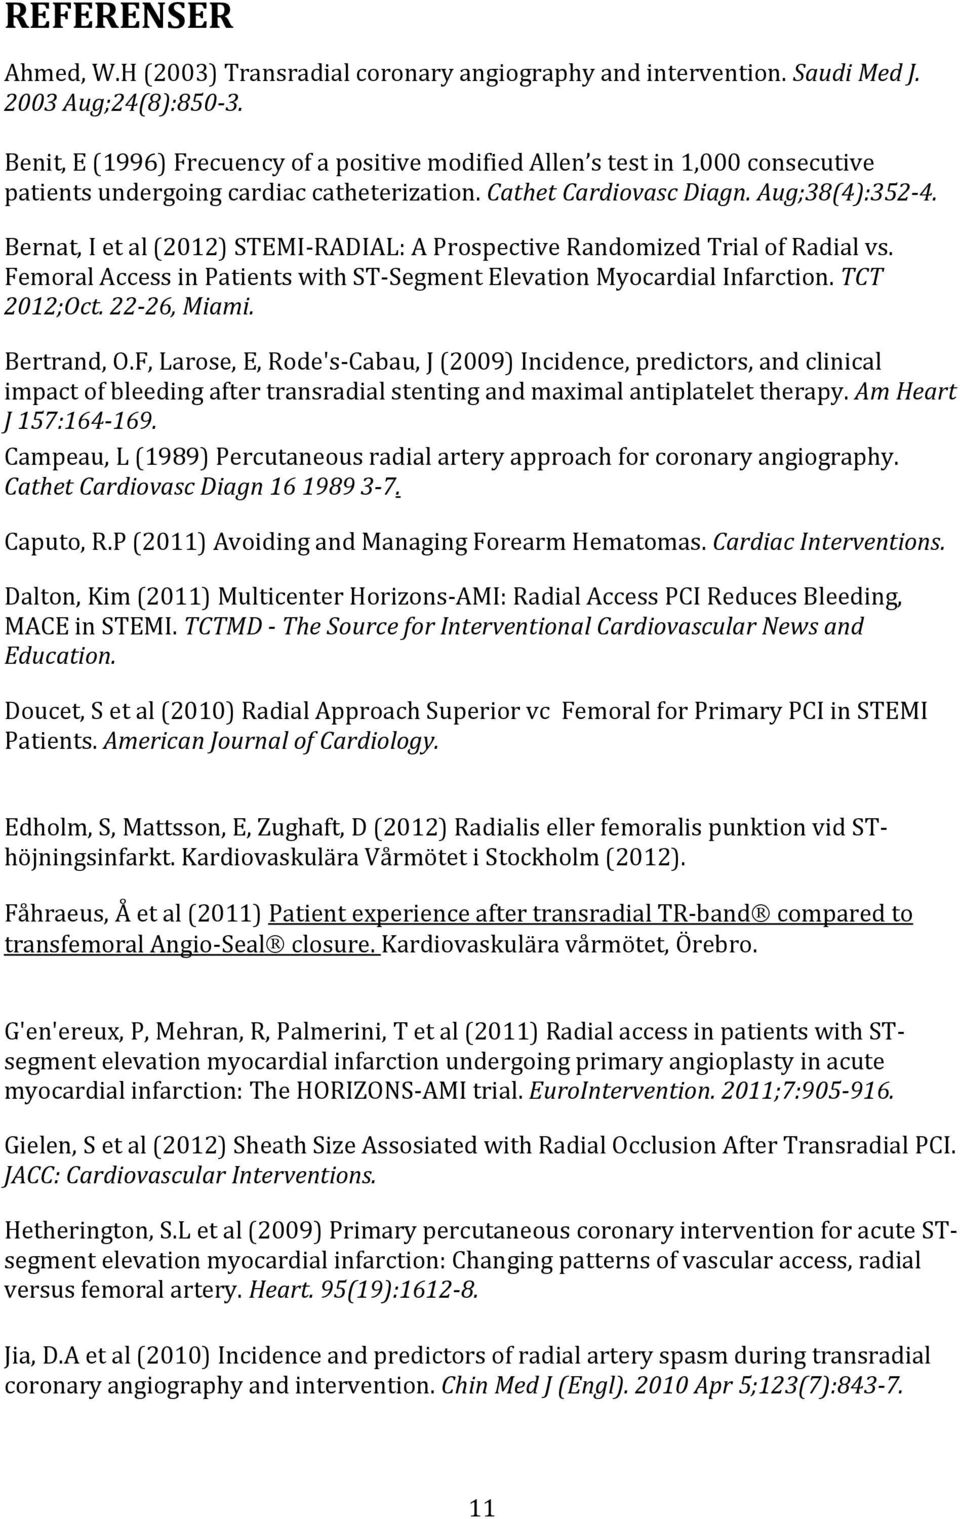 Bernat, I et al (2012) STEMI-RADIAL: A Prospective Randomized Trial of Radial vs. Femoral Access in Patients with ST-Segment Elevation Myocardial Infarction. TCT 2012;Oct. 22-26, Miami. Bertrand, O.